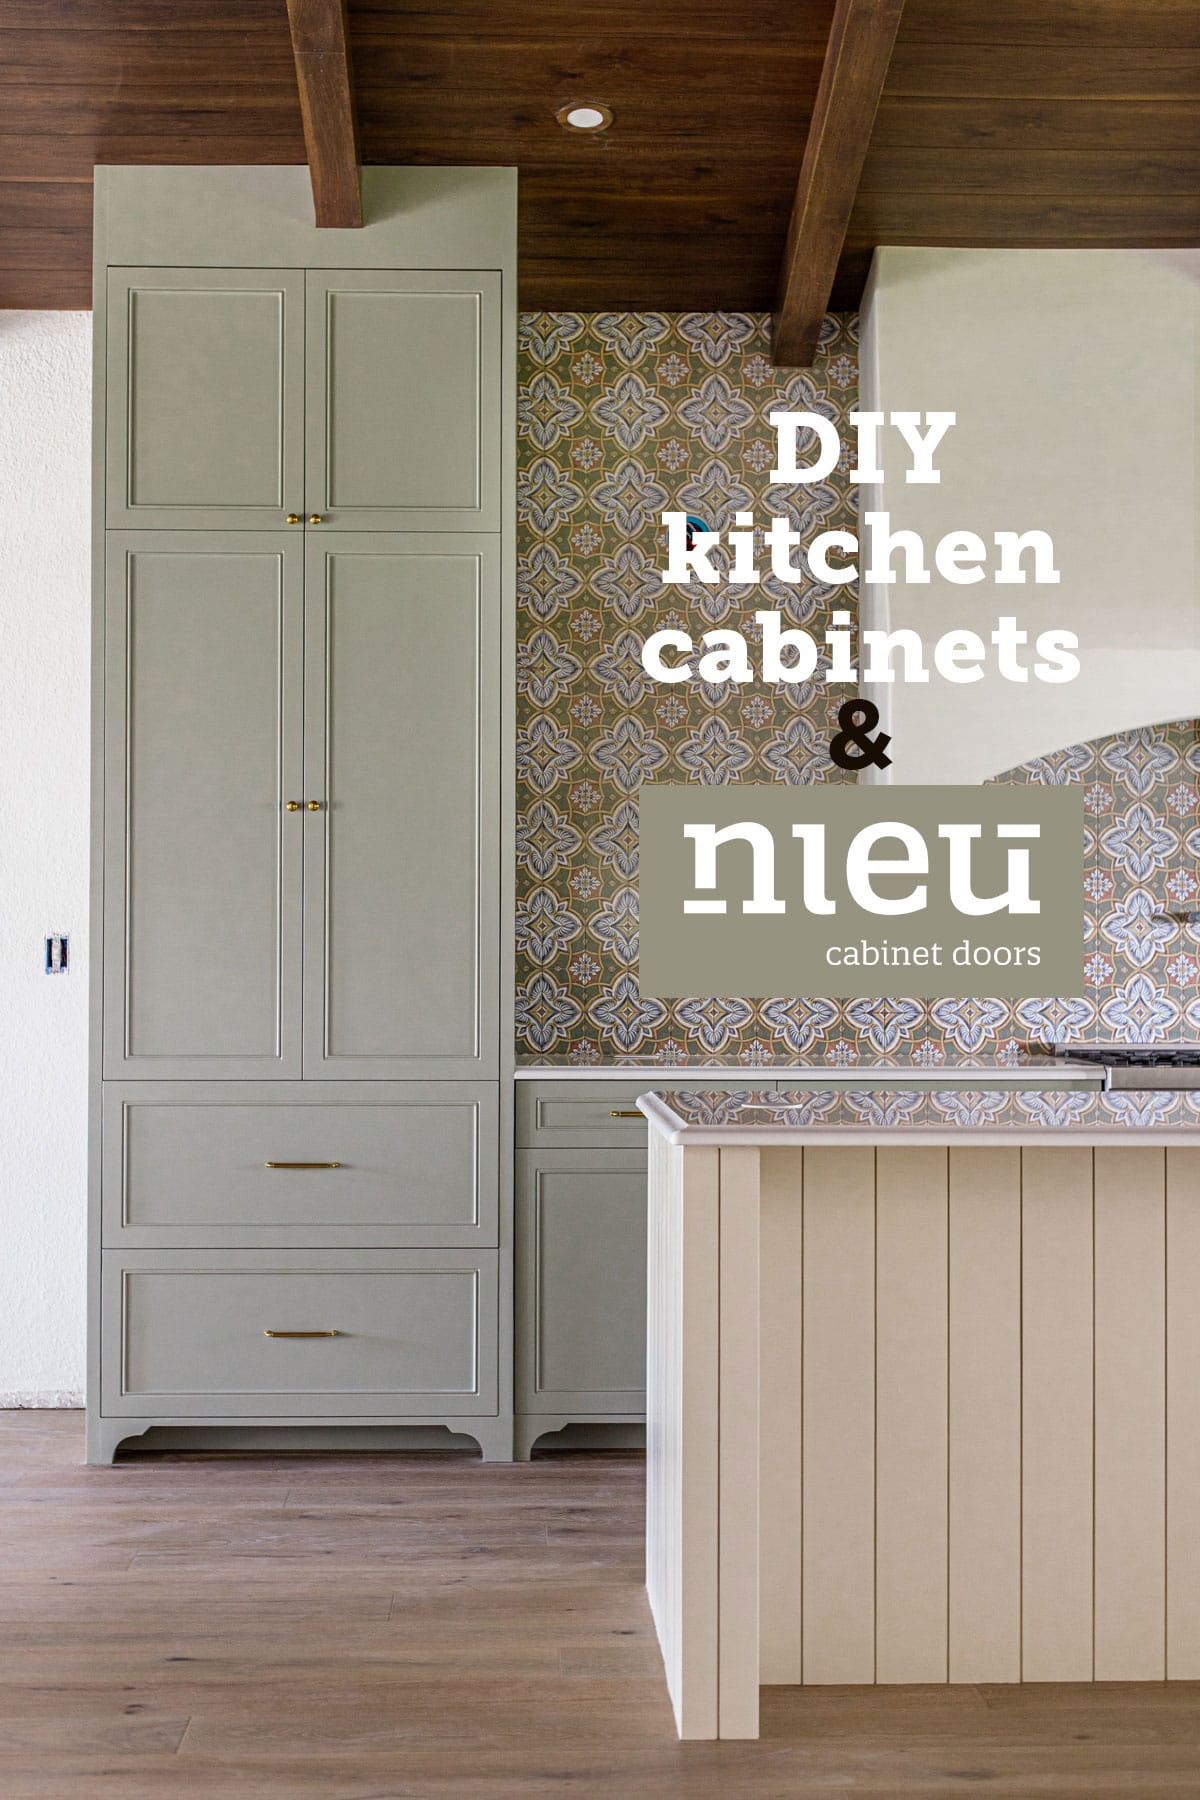 diy kitchen cabinets with nieu cabinet doors